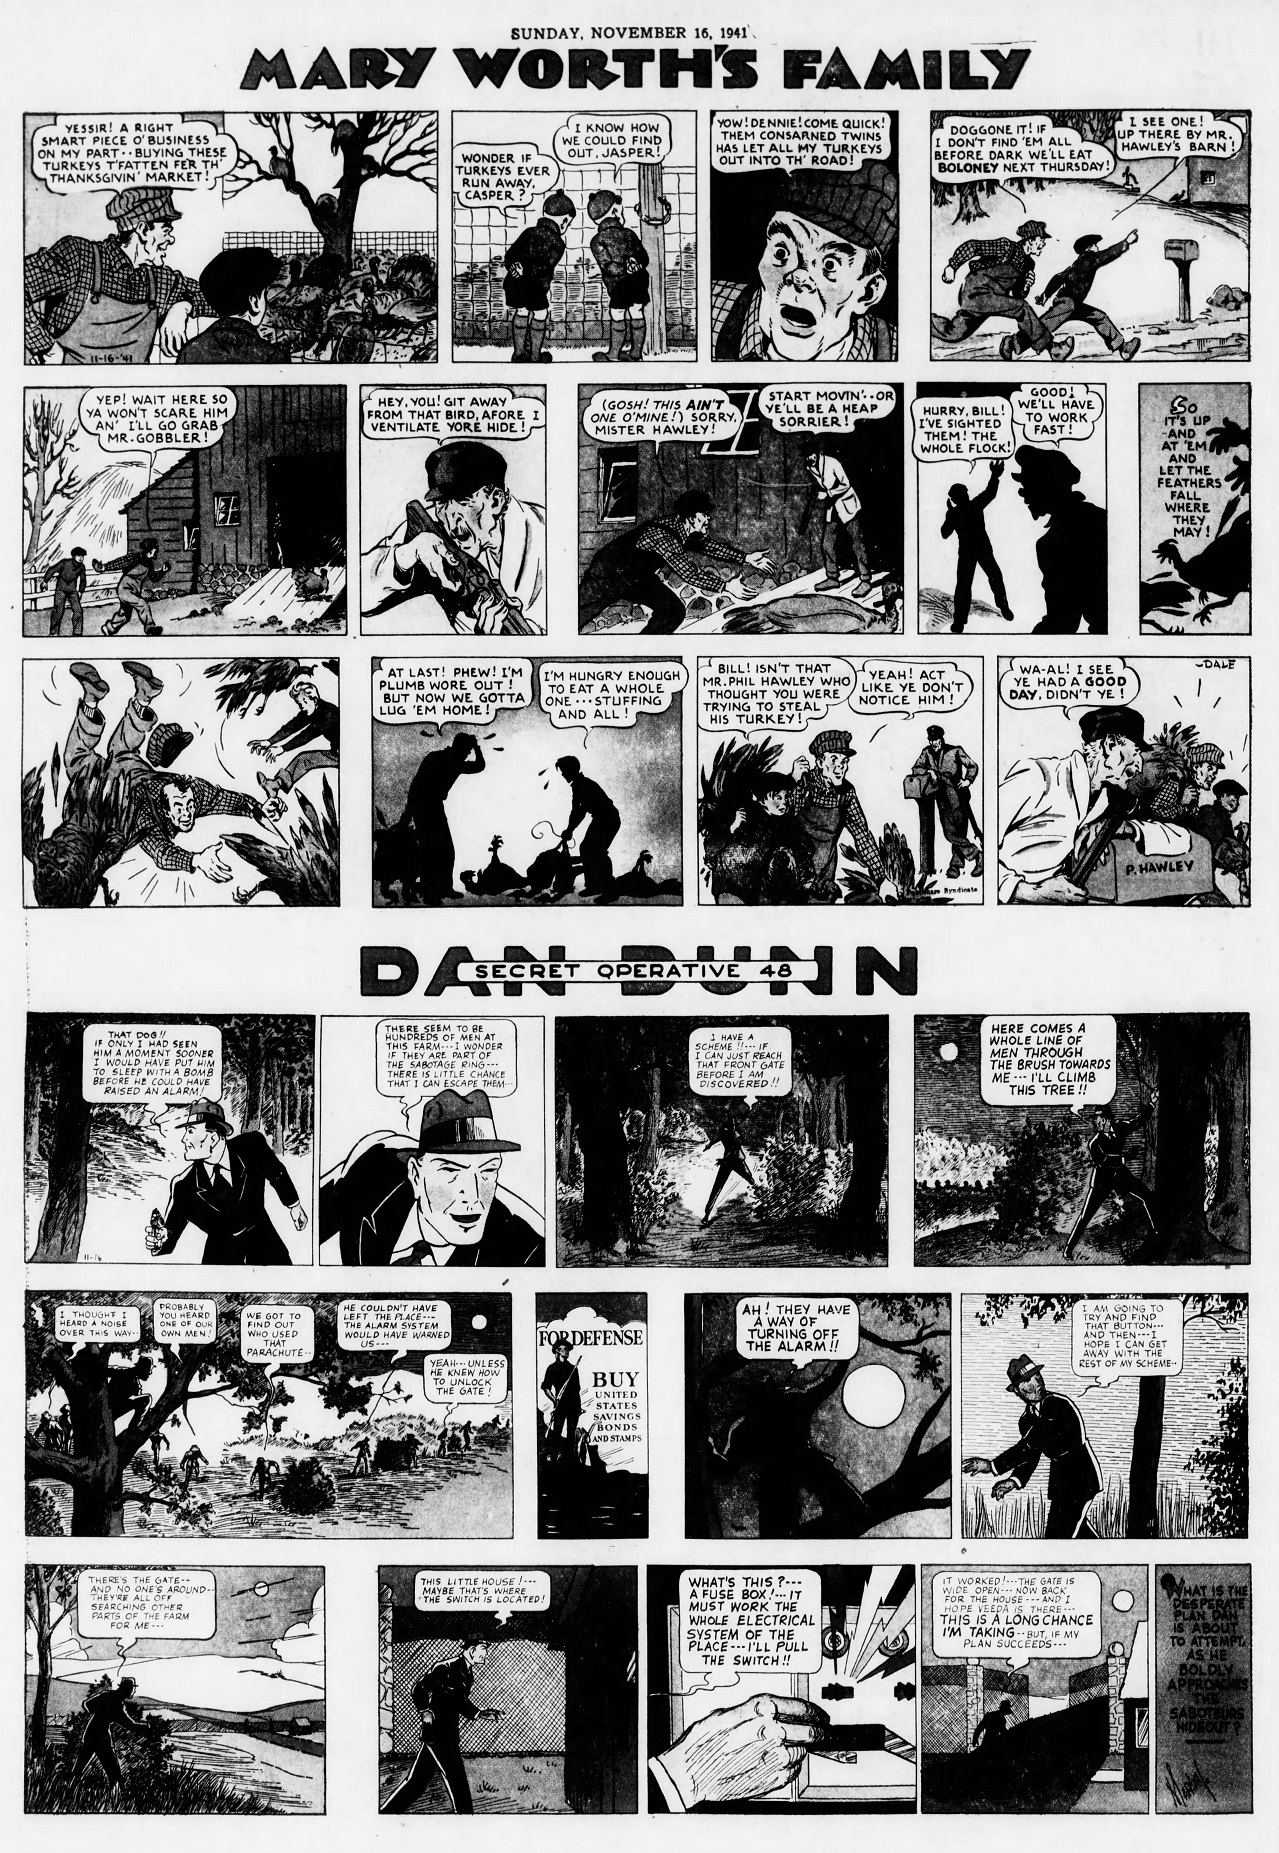 The_Brooklyn_Daily_Eagle_Sun__Nov_16__1941_(7).jpg